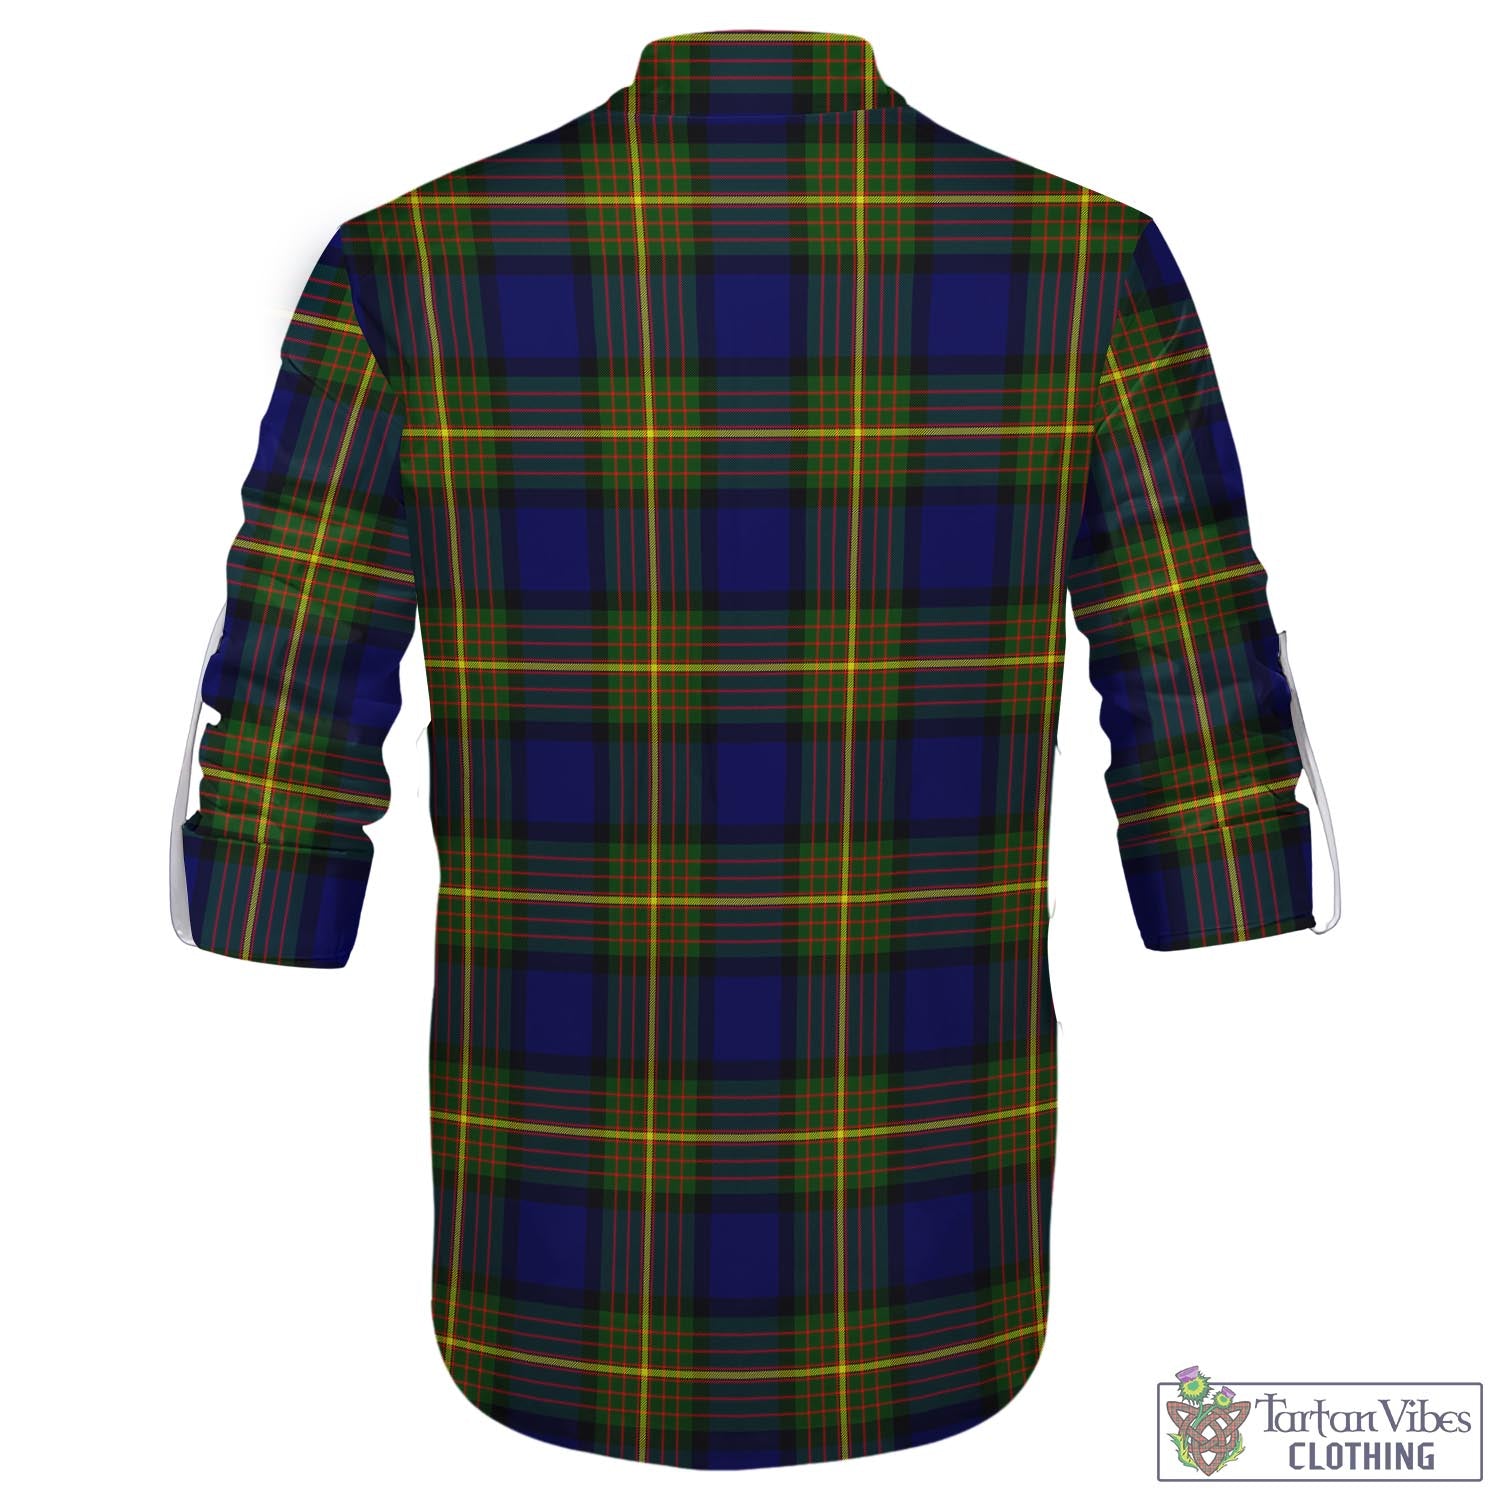 Tartan Vibes Clothing Muir Tartan Men's Scottish Traditional Jacobite Ghillie Kilt Shirt with Family Crest